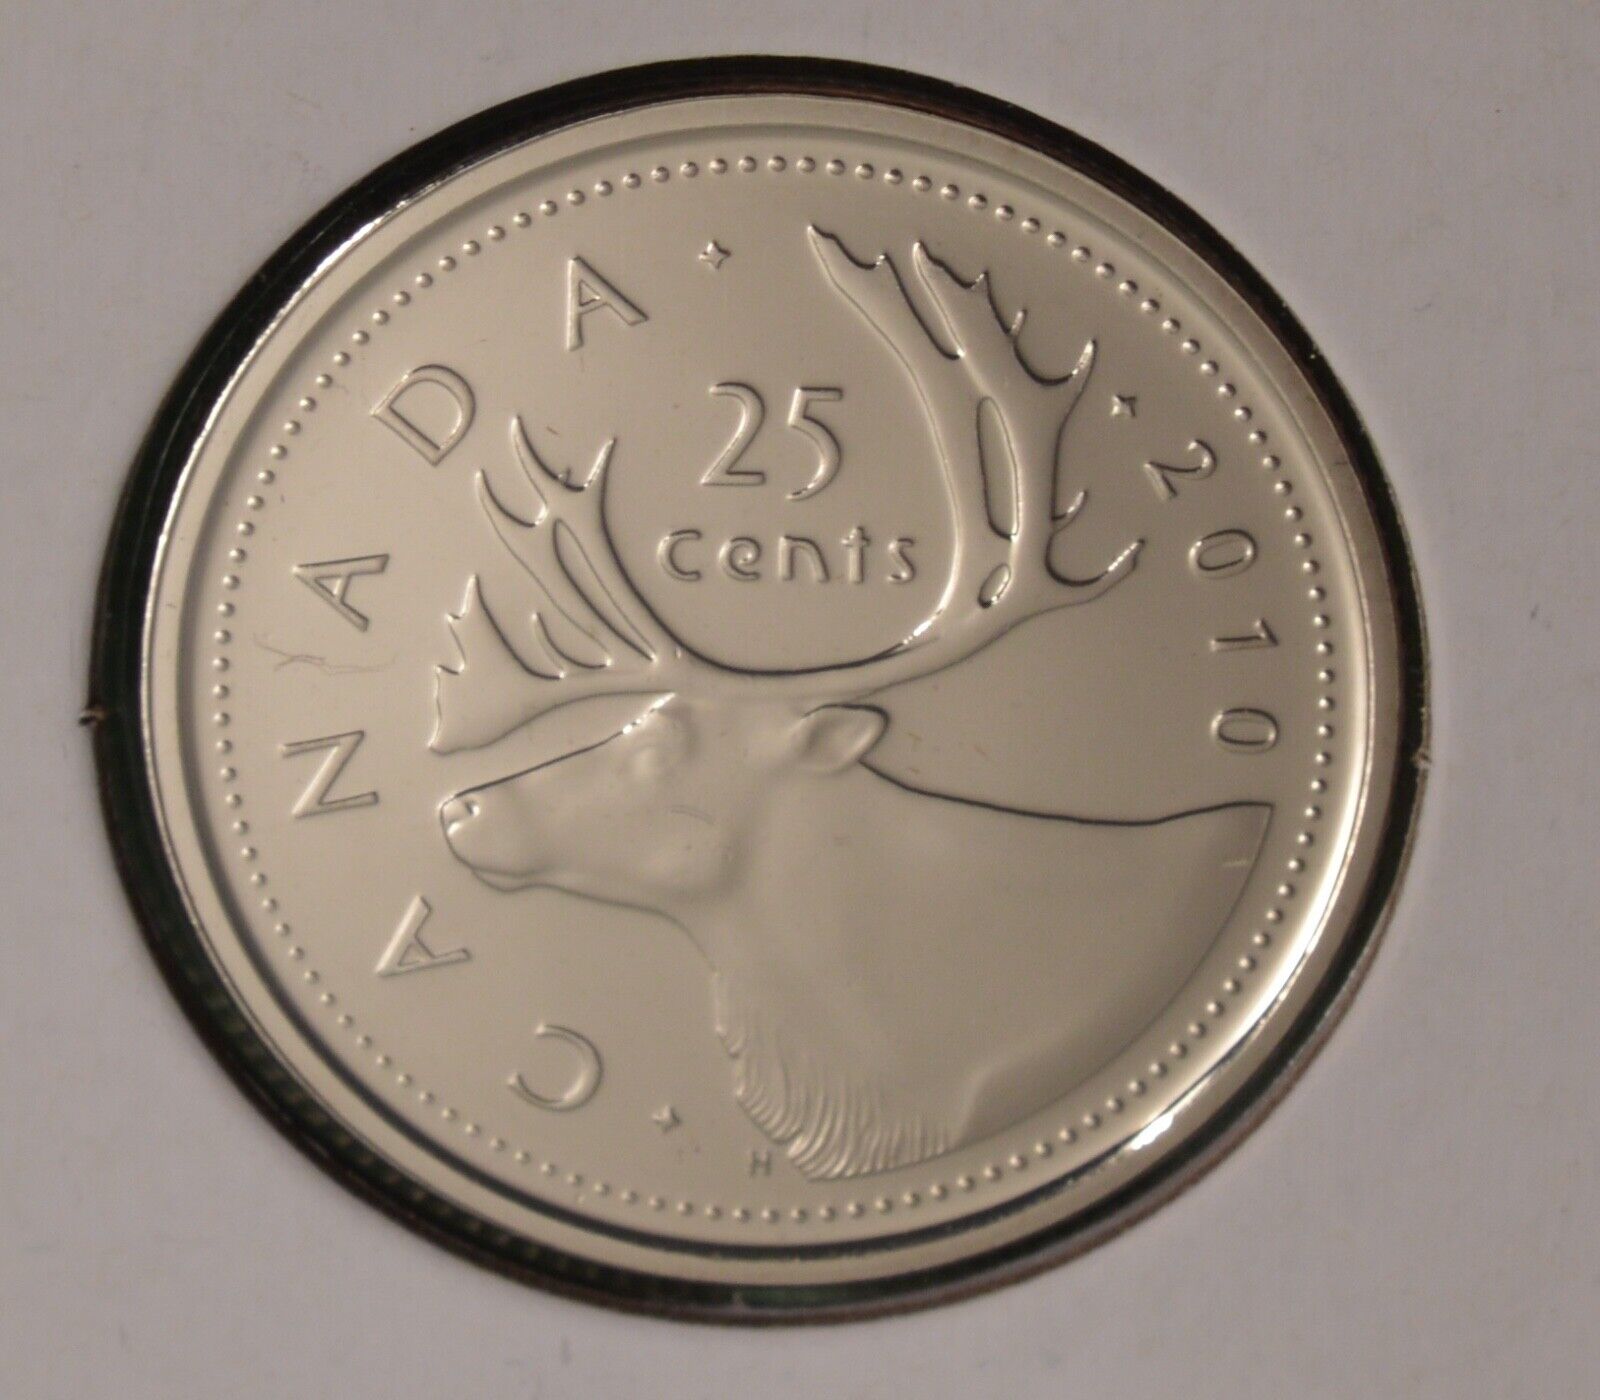 2010 Canada Twenty Five Cents  - Proof Like - (PL) Uncirculated  🇨🇦